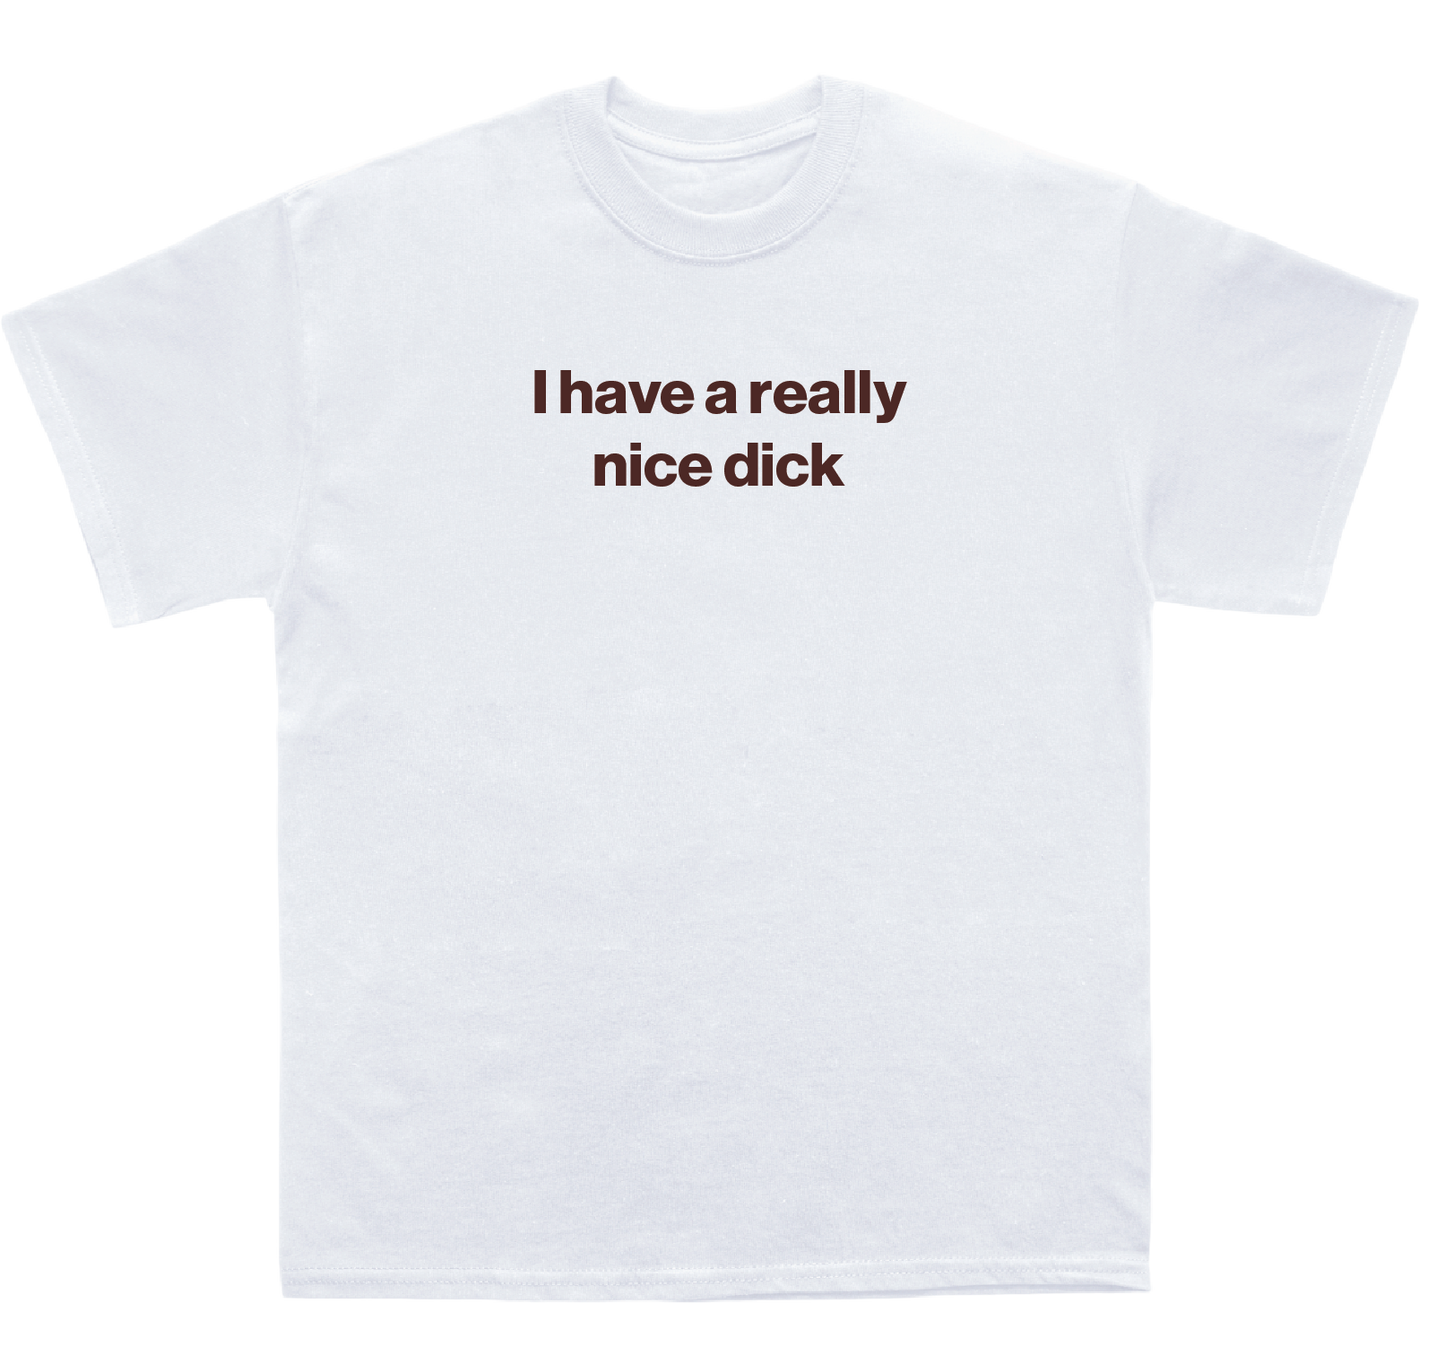 I have a really nice dick shirt